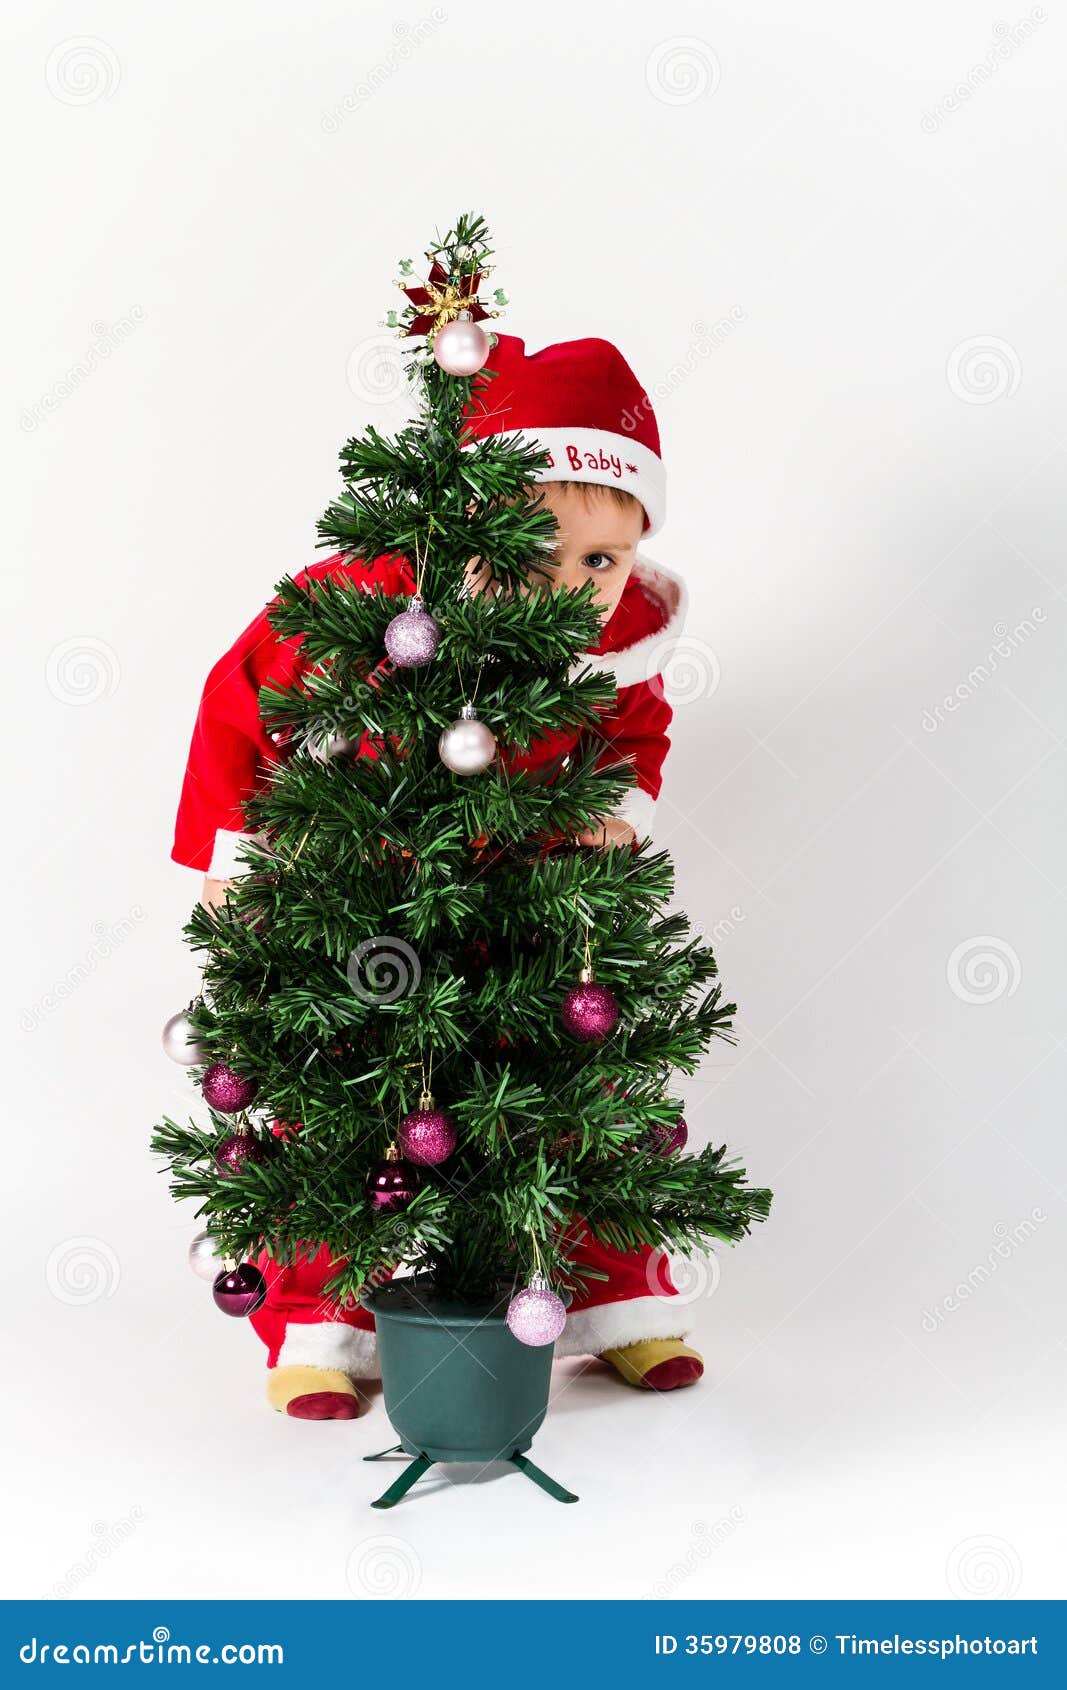 Baby Boy Dressed As Santa Claus Hiding Behind Christmas Tree Royalty ...